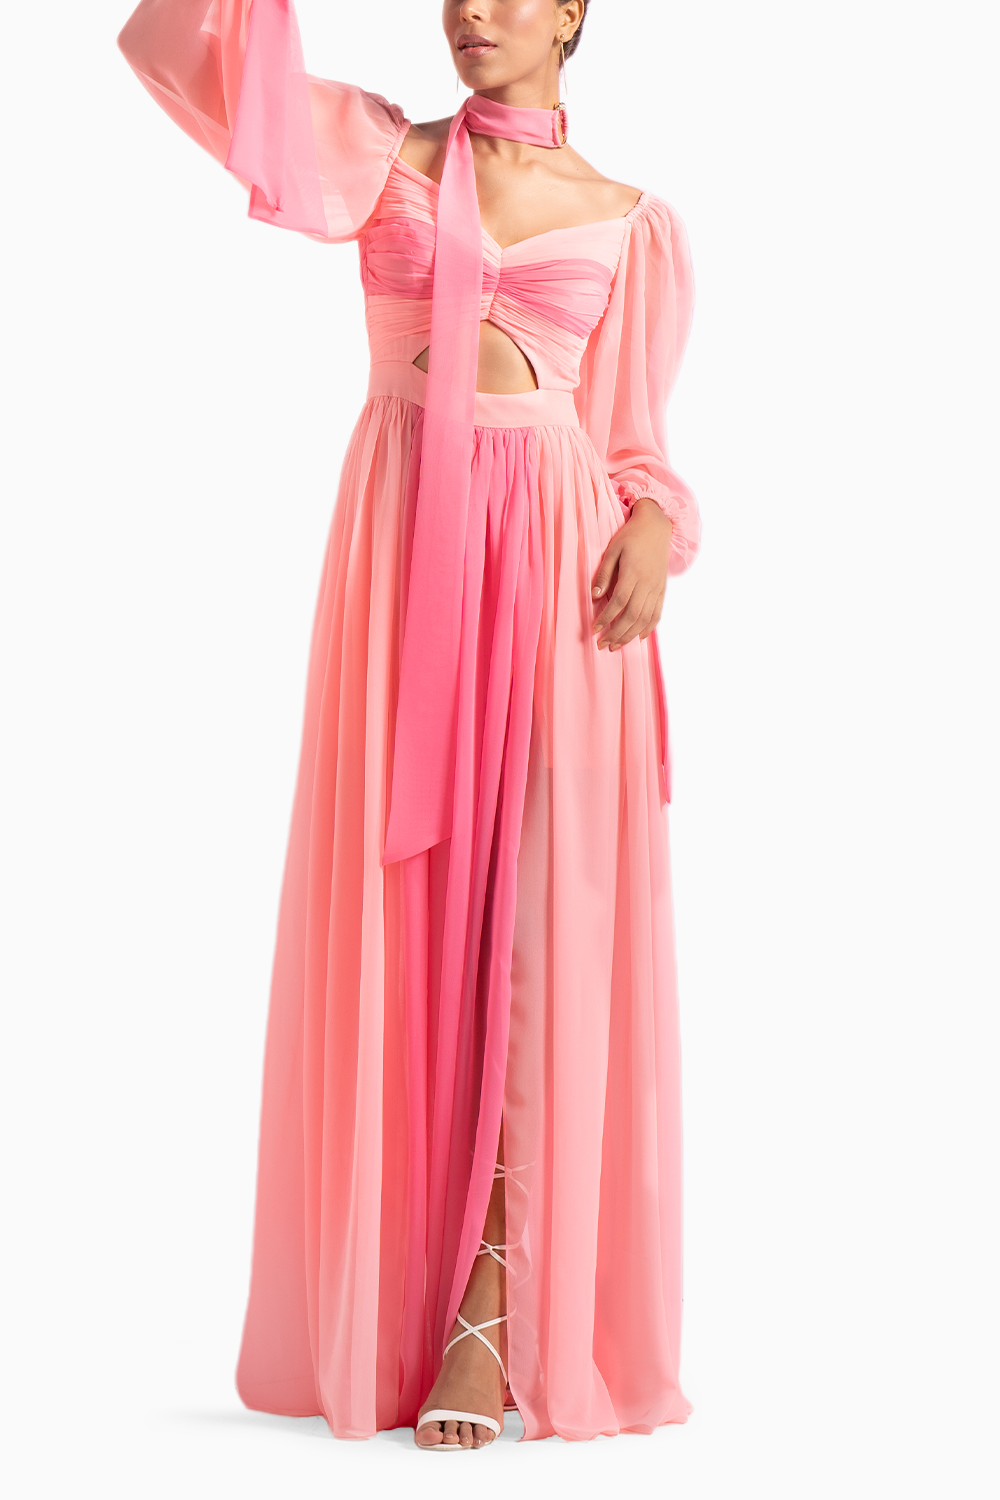 Fondant Pink Dress